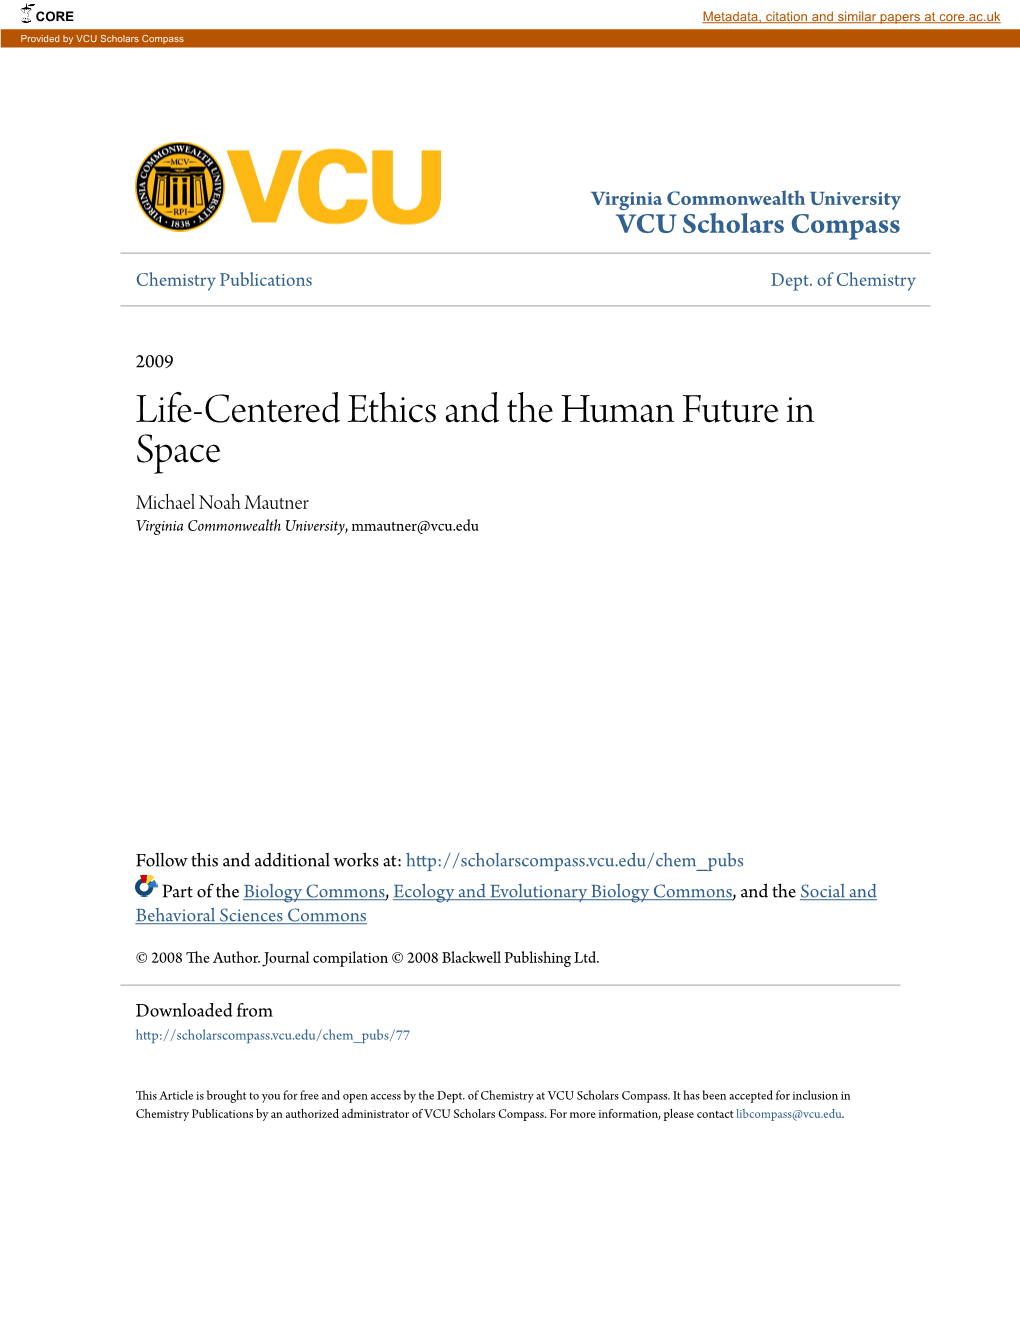 Life-Centered Ethics and the Human Future in Space Michael Noah Mautner Virginia Commonwealth University, Mmautner@Vcu.Edu